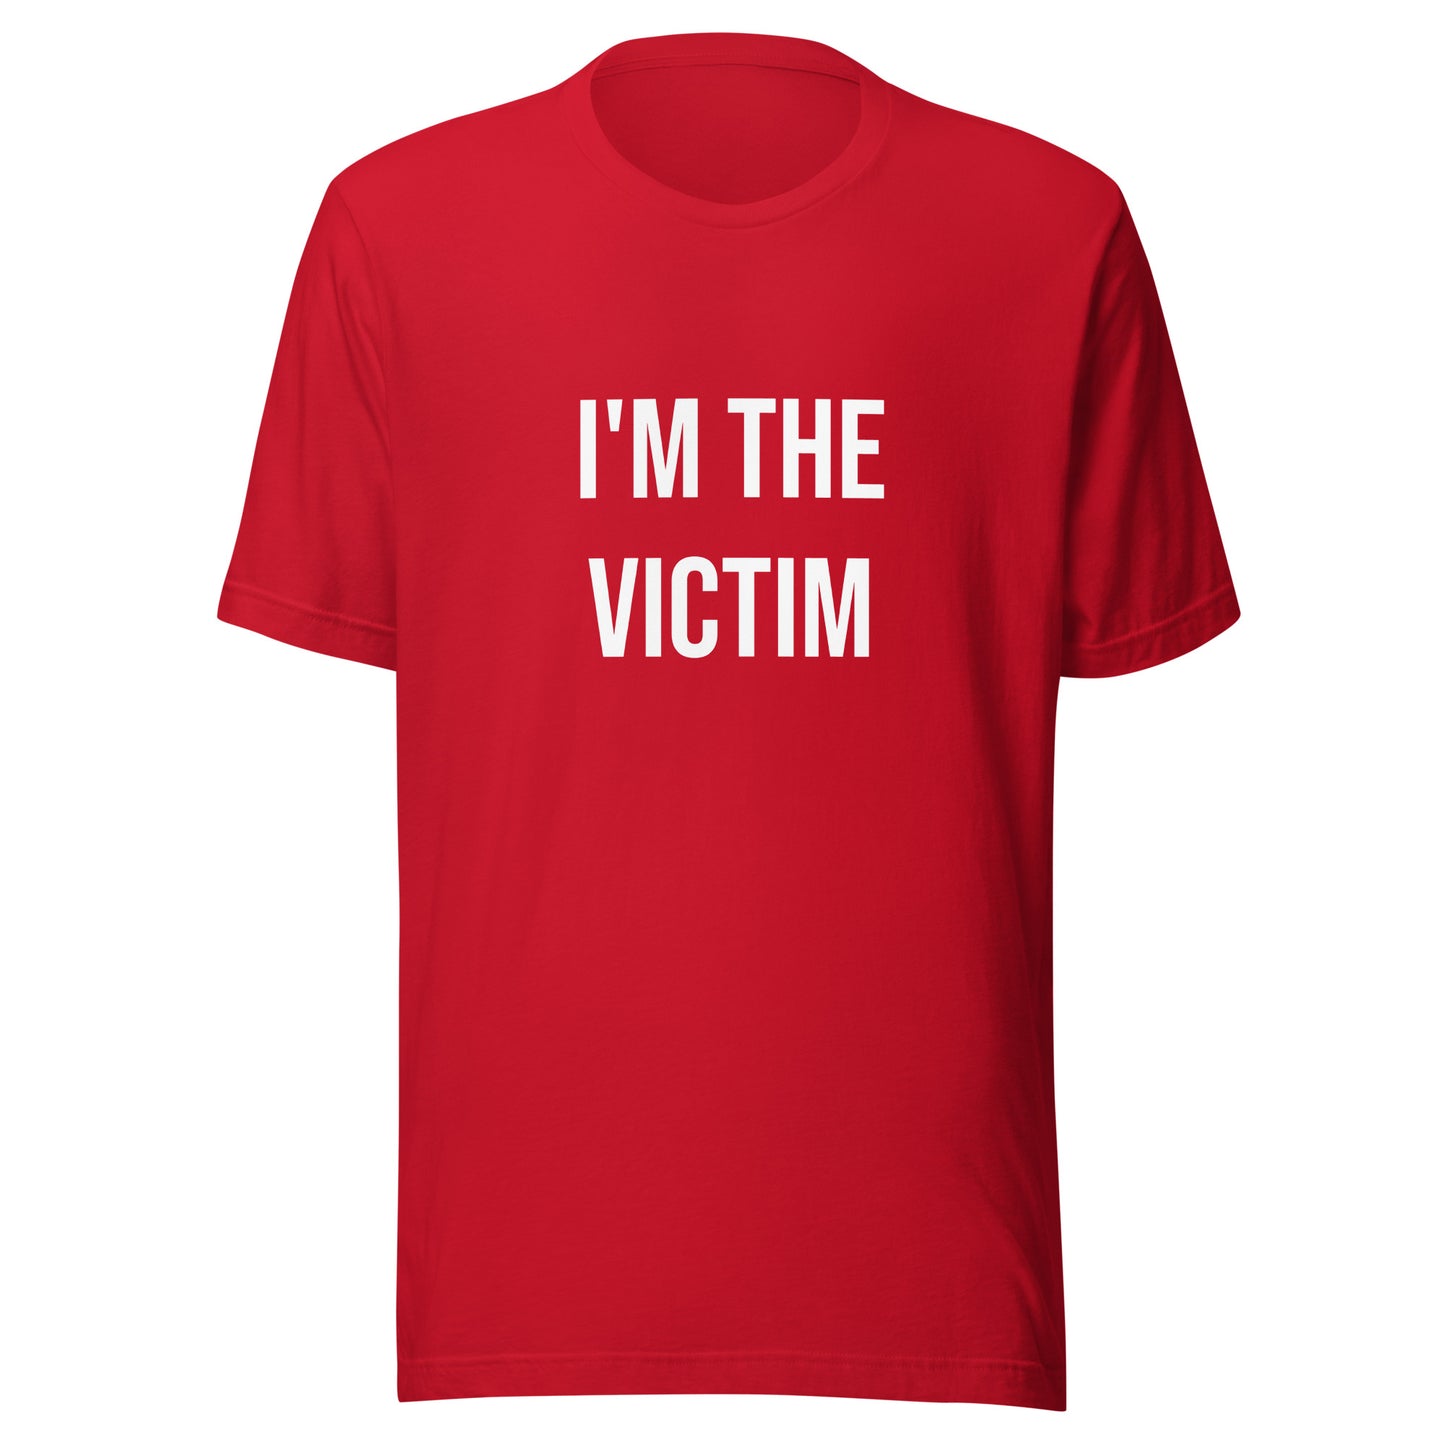 Victim T-shirt